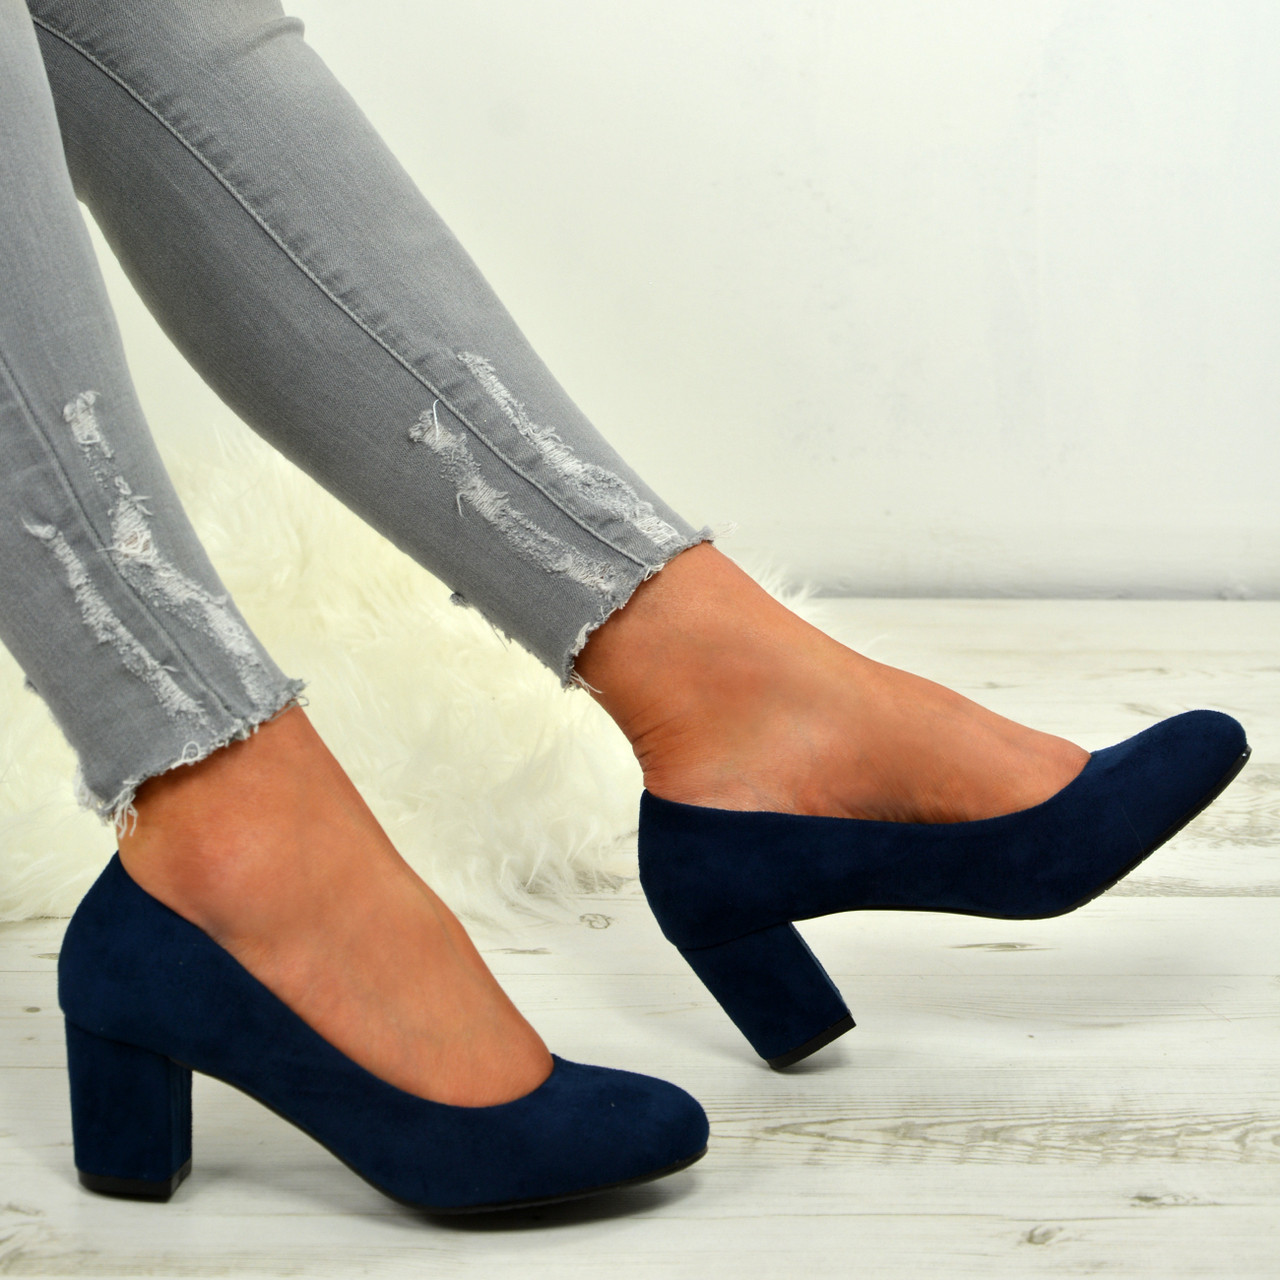 blue mid heel shoes uk